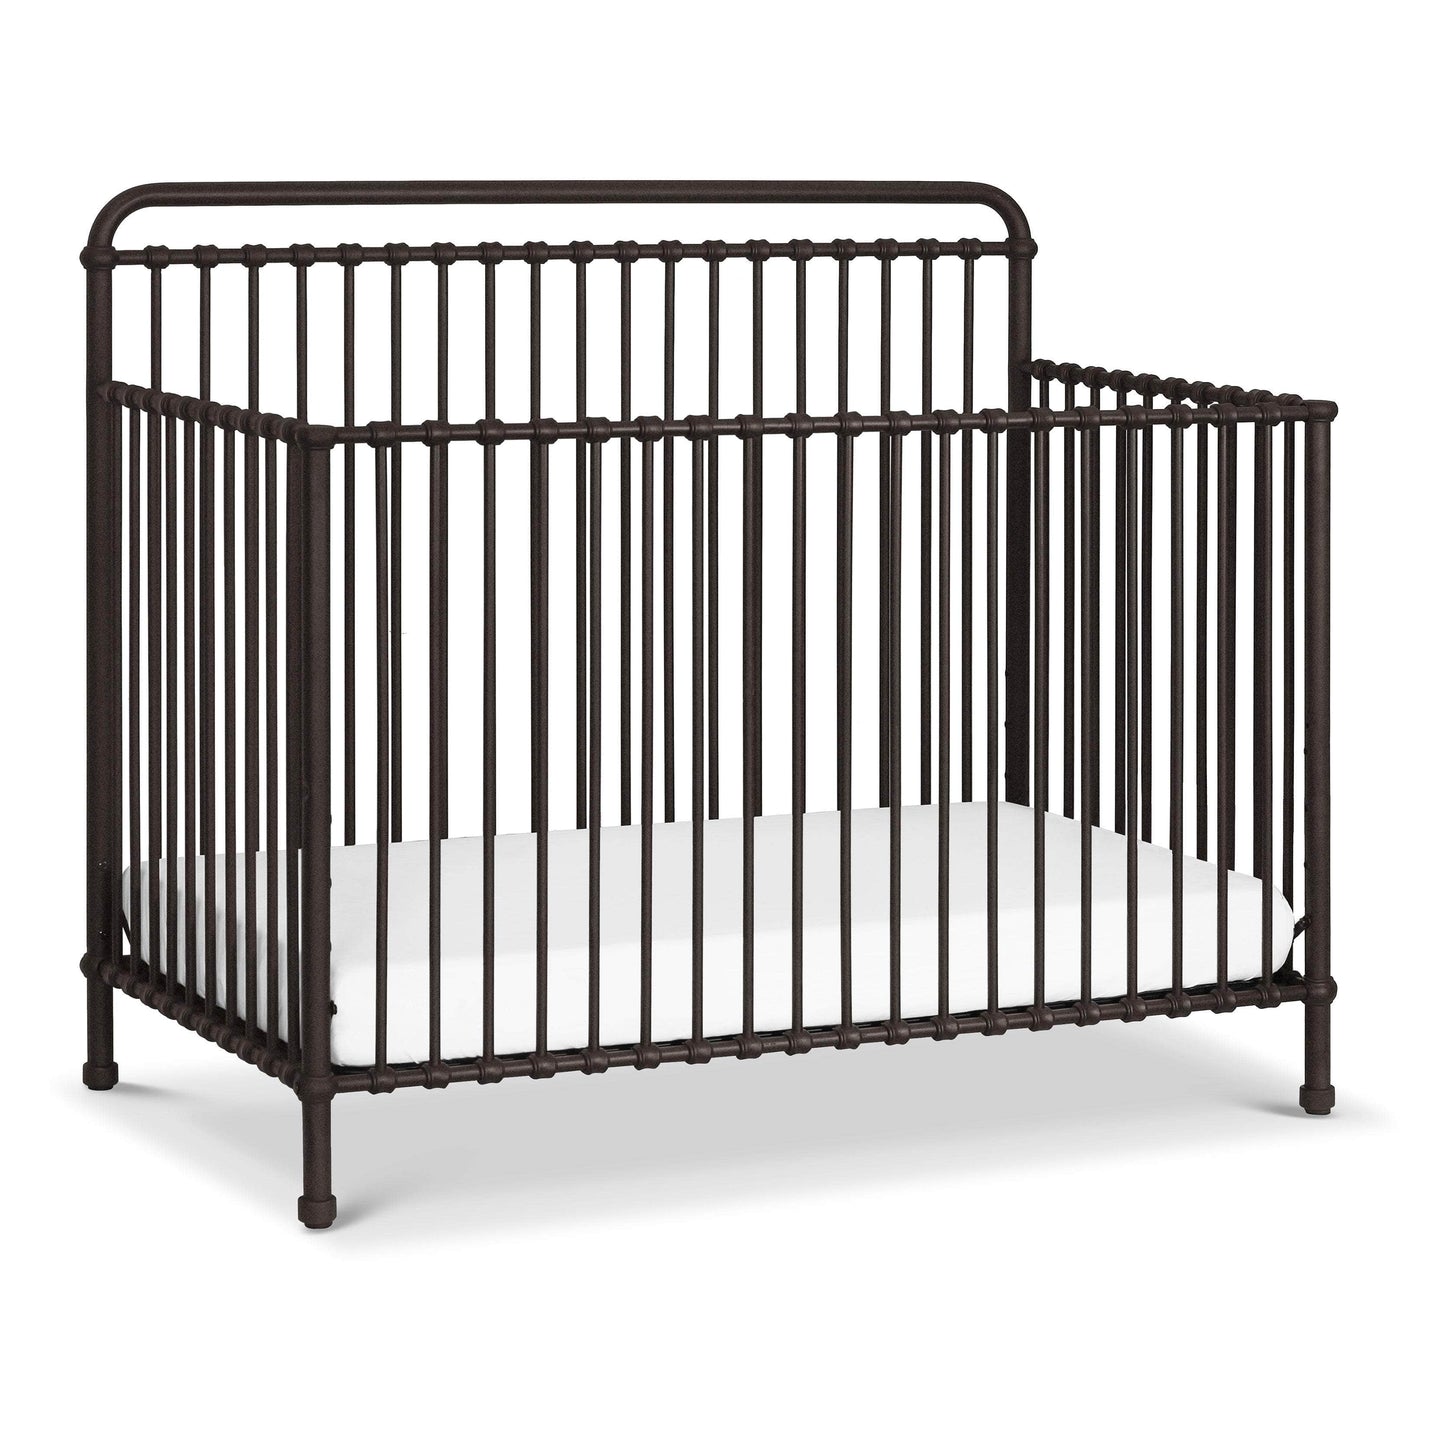 B15301UR,Winston 4-in-1 Convertible Crib in Vintage Iron